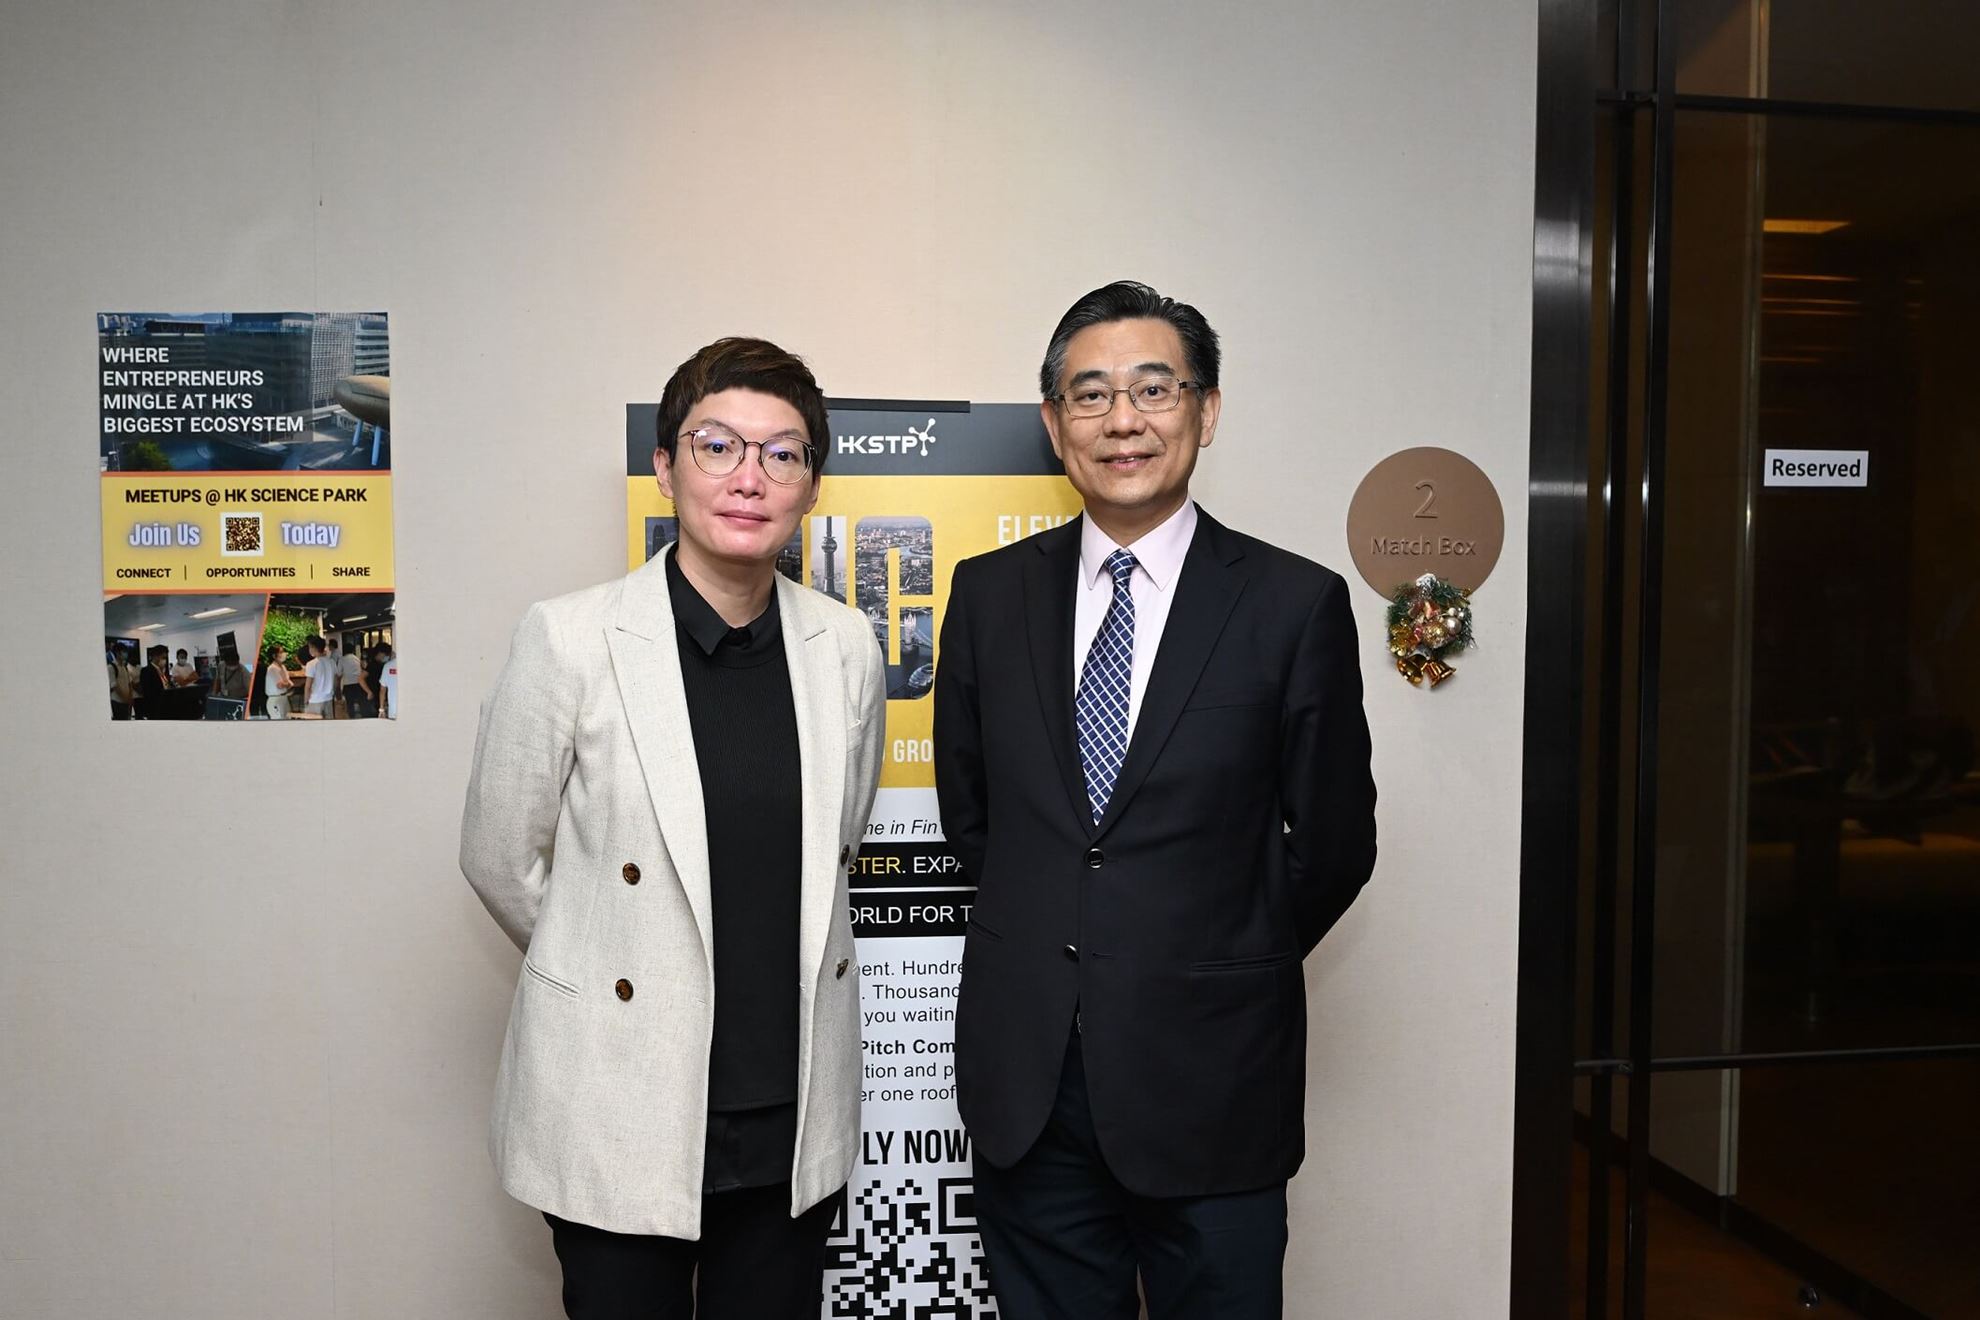 photo-2-HKSTP AND IBDG COLLABORATE ON BIG DATA GOVERNANCE TO REALISE HONG KONG